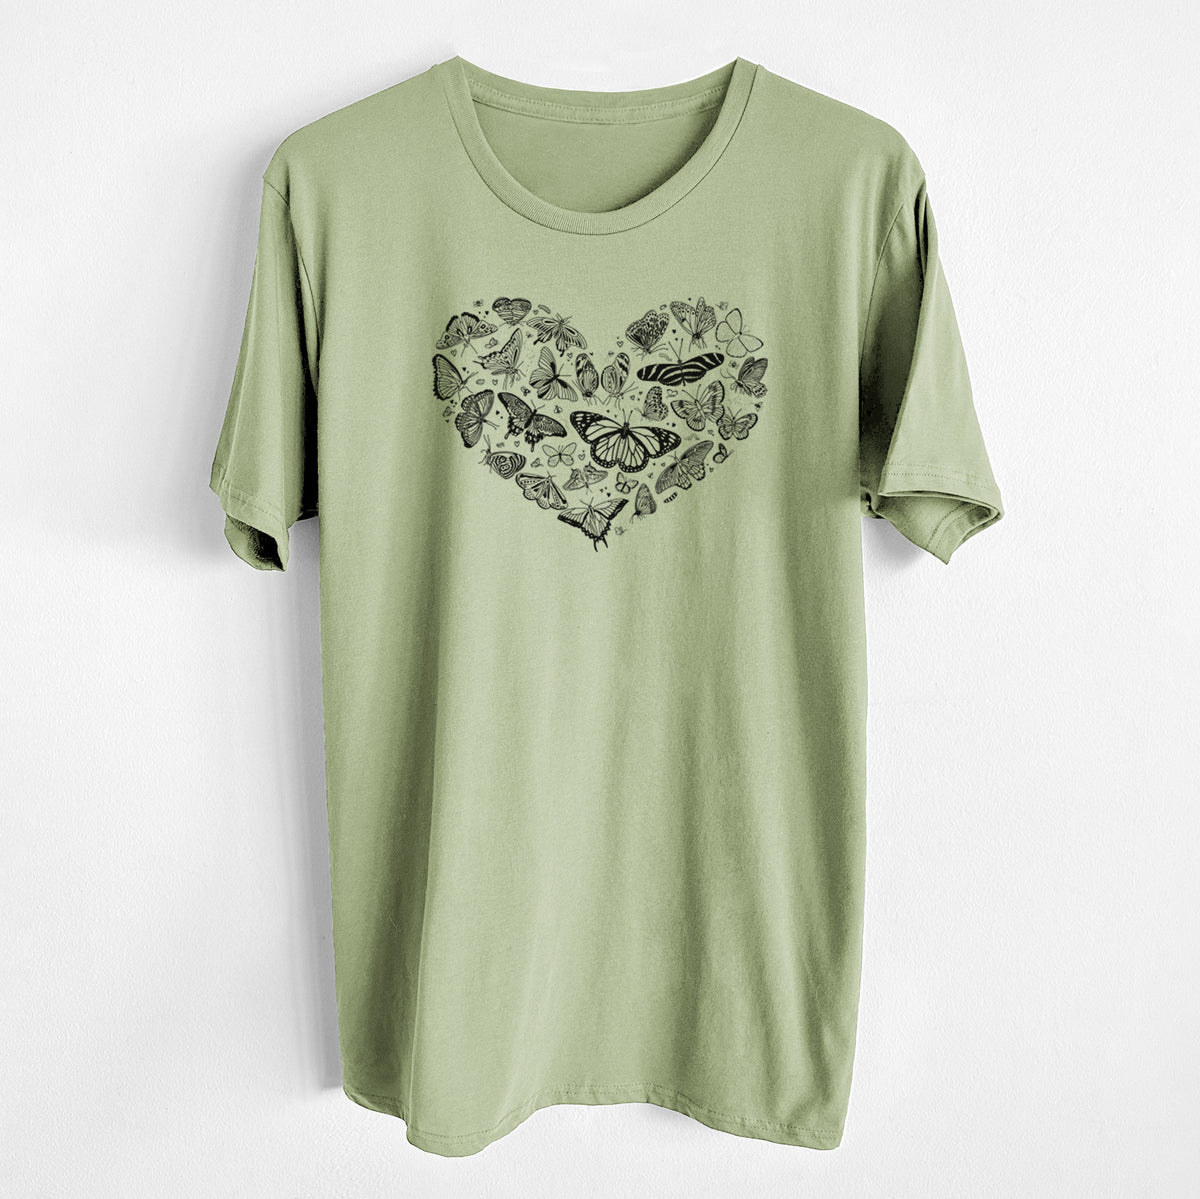 Heart Full of Butterflies - Unisex Crewneck - Made in USA - 100% Organic Cotton